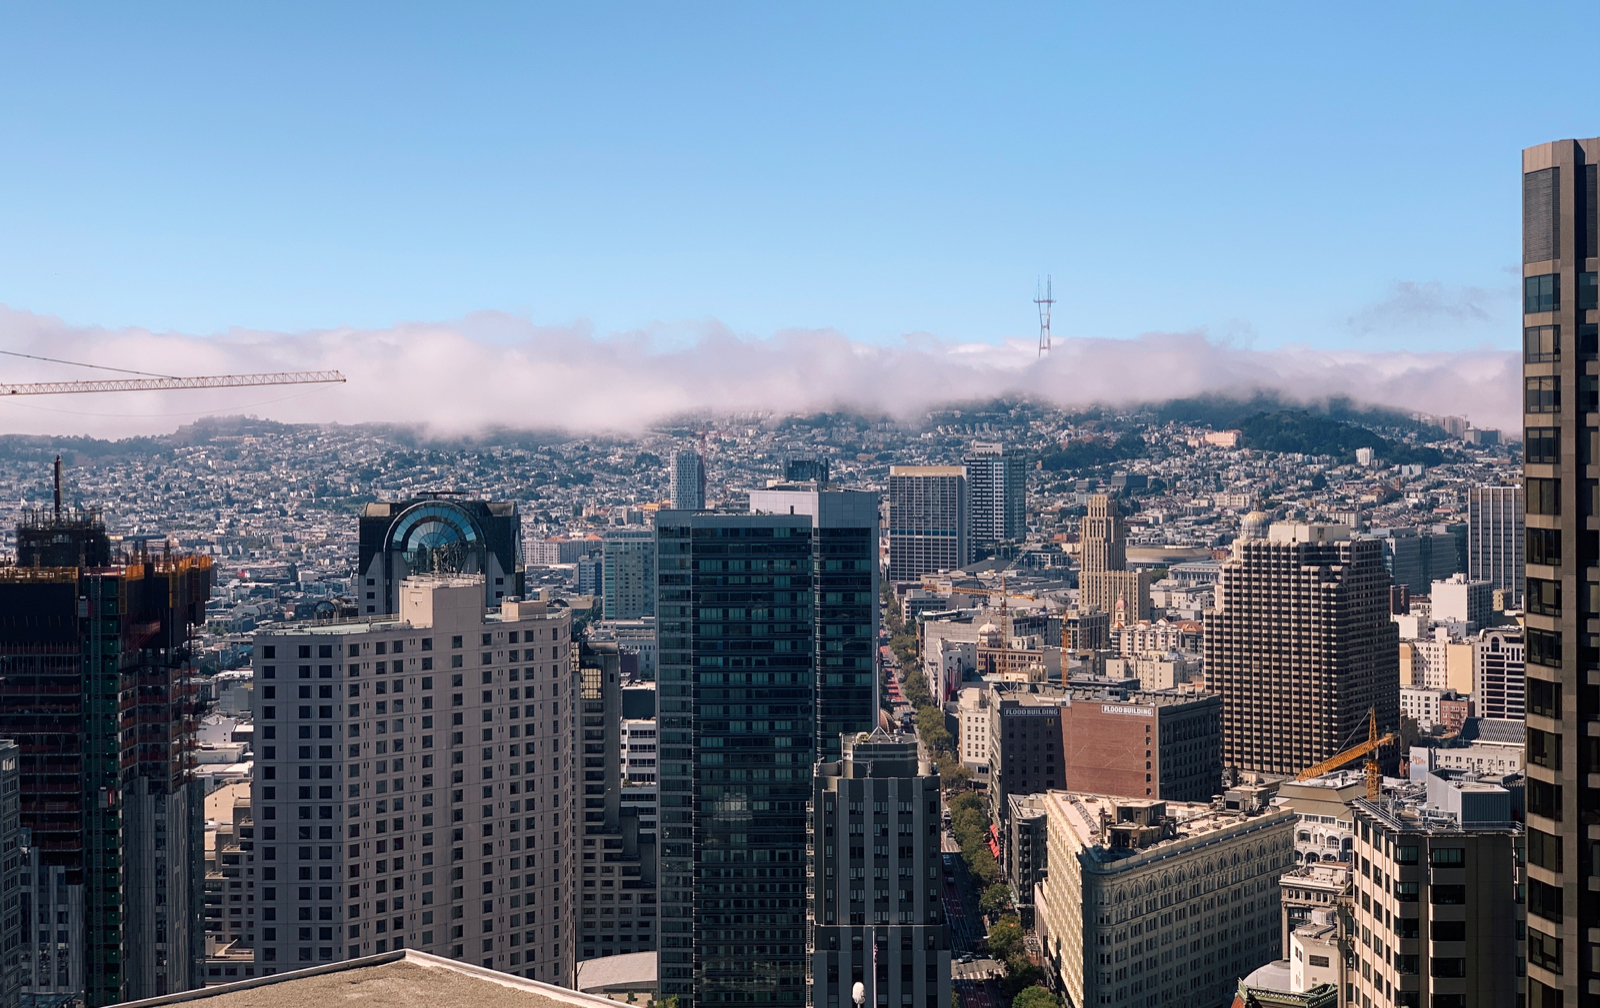 Photograph of San Francisco